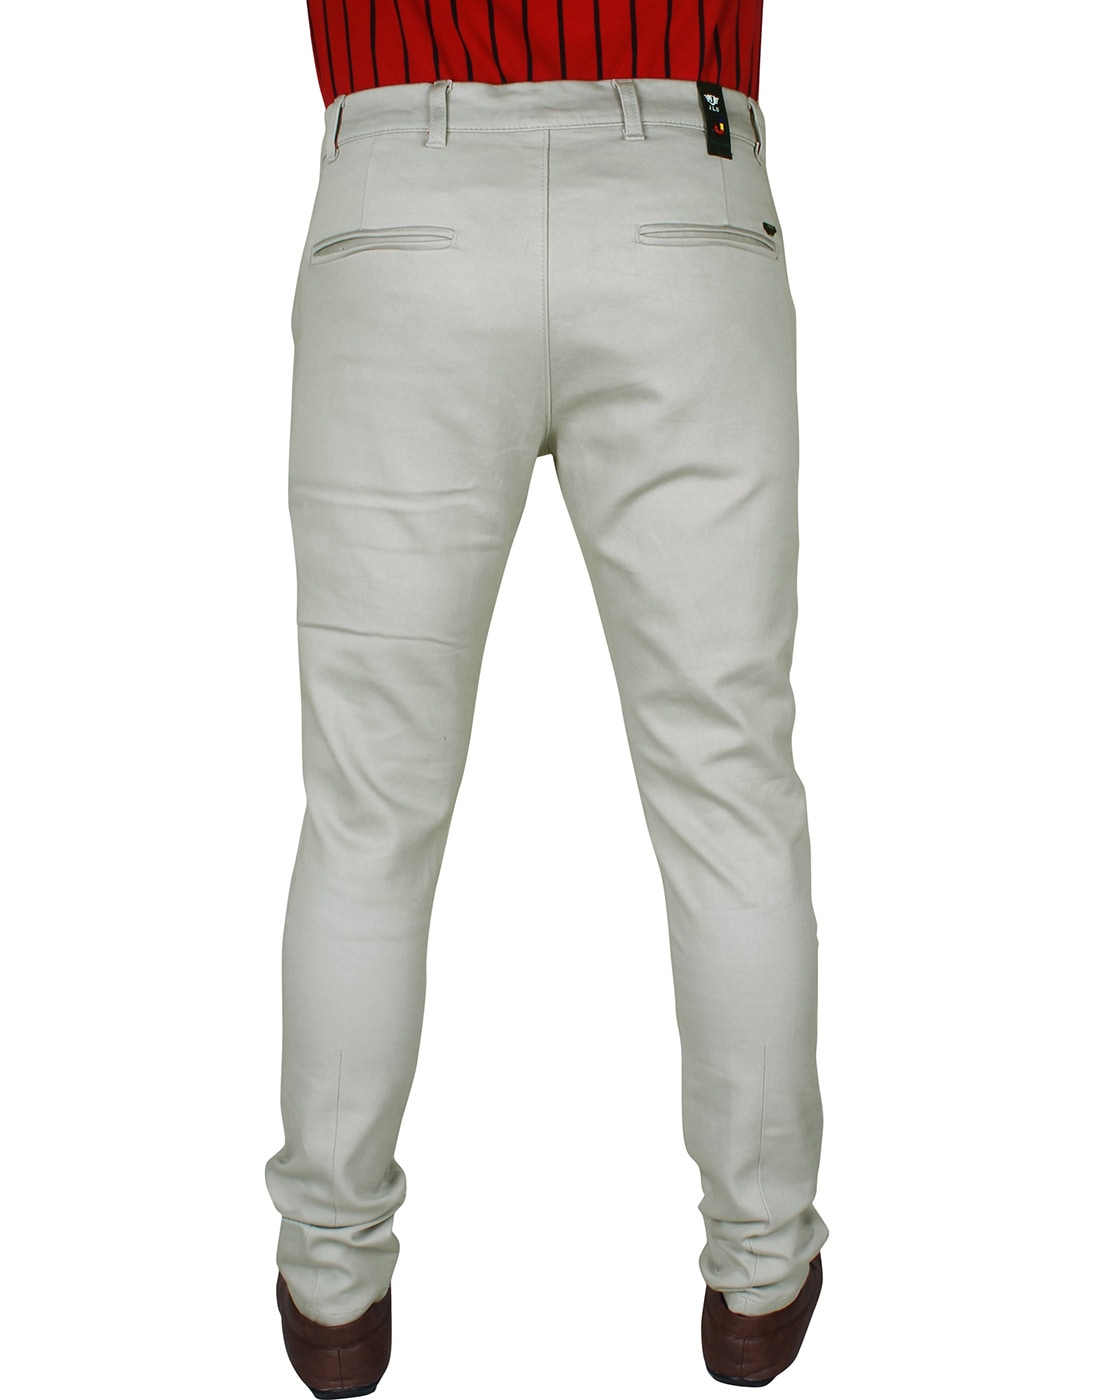 Buy Khakhi Trousers & Pants for Men by C & C Online | Ajio.com